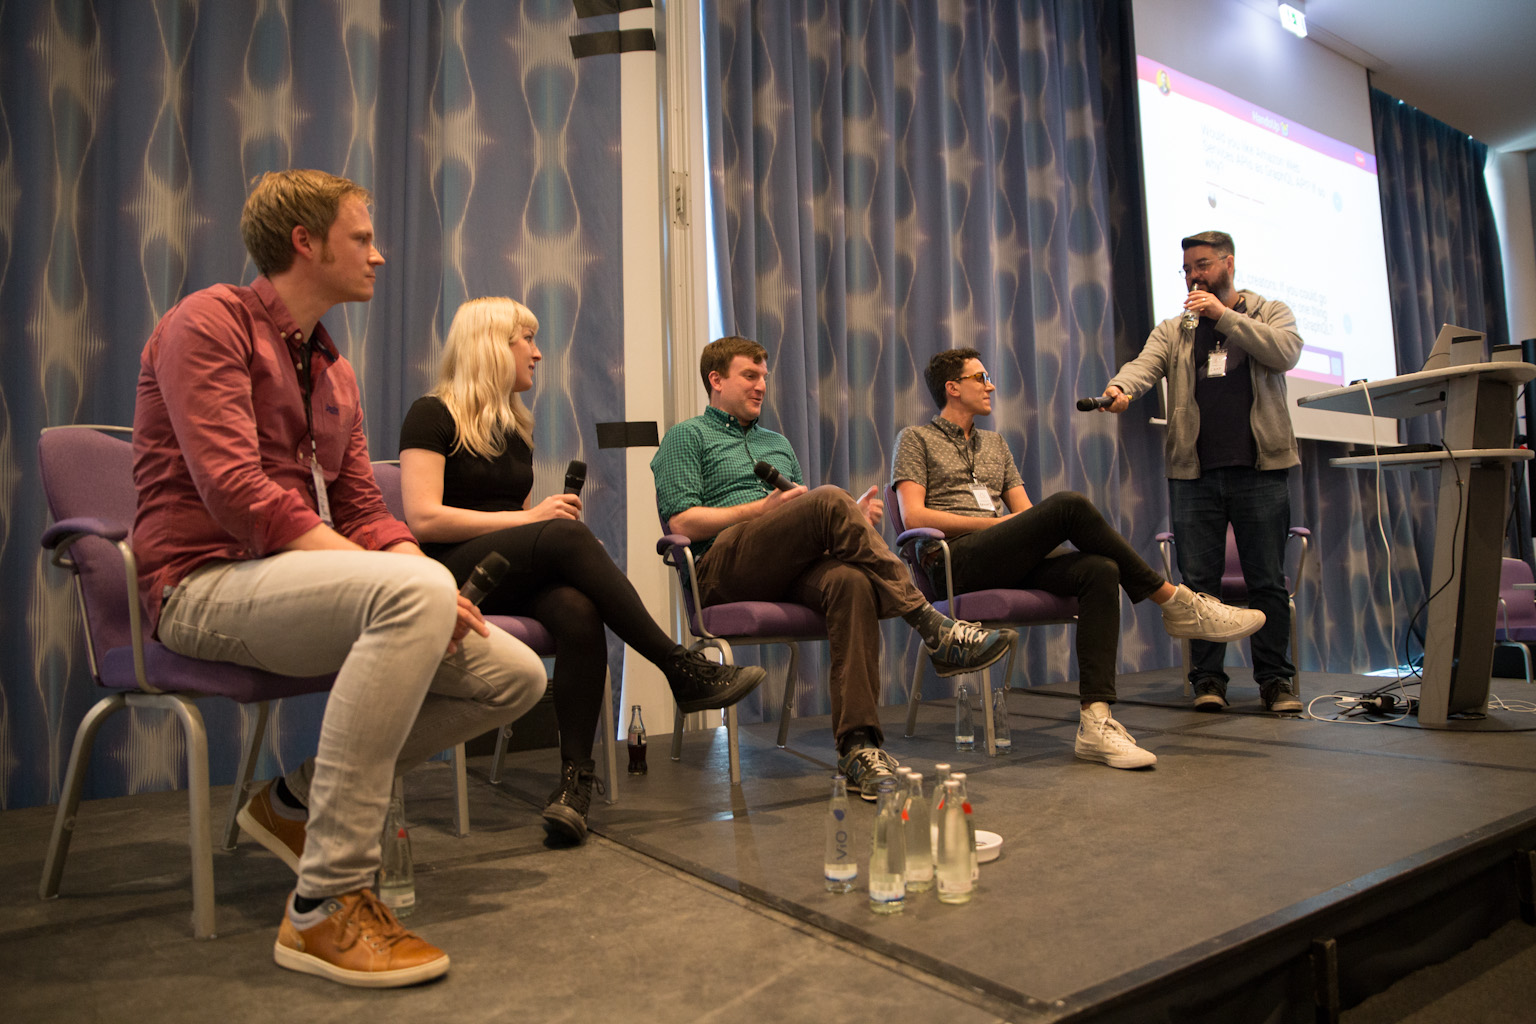 From left to right: Panelists Björn Rochel, Mina Smart, Daniel Schafer, and Brooks Swinnerton, with moderator Chad Fowler